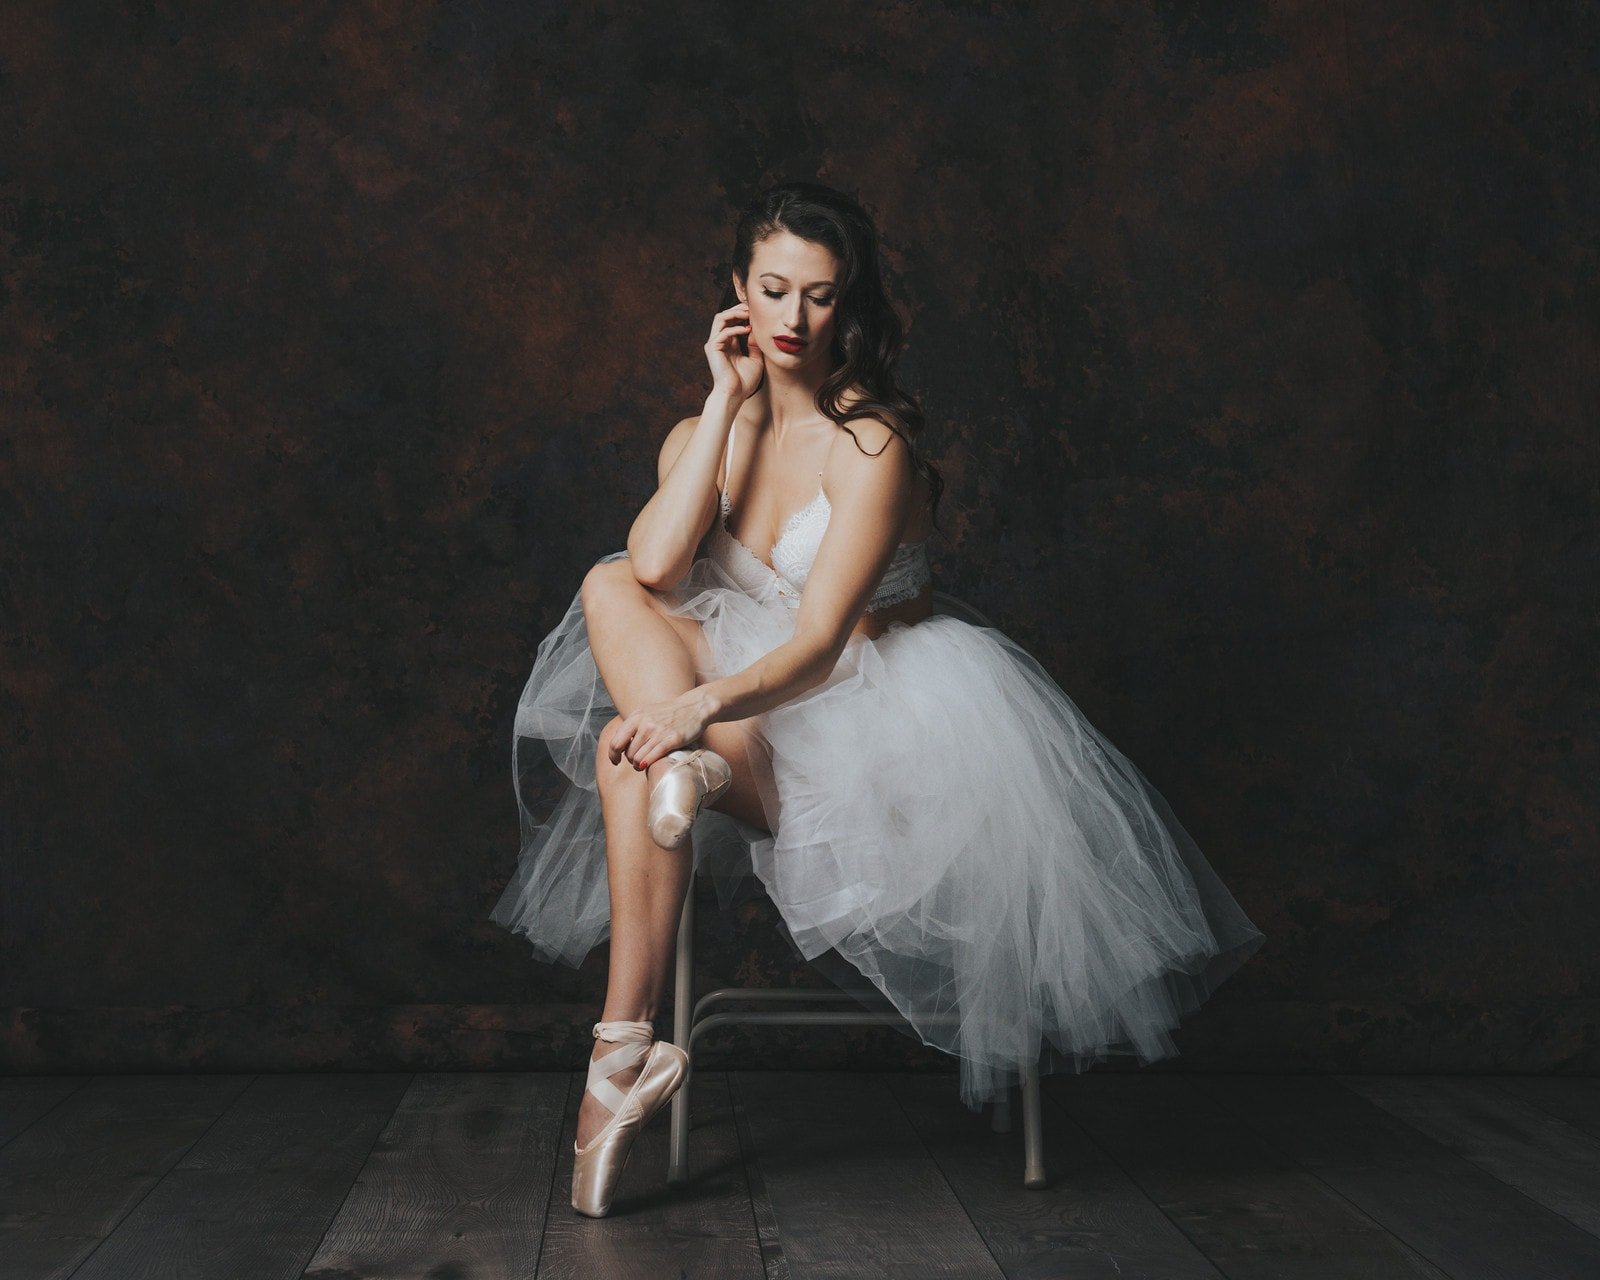 Ken Cheng Photography - Ballerina Photo - Ken Cheng Photography